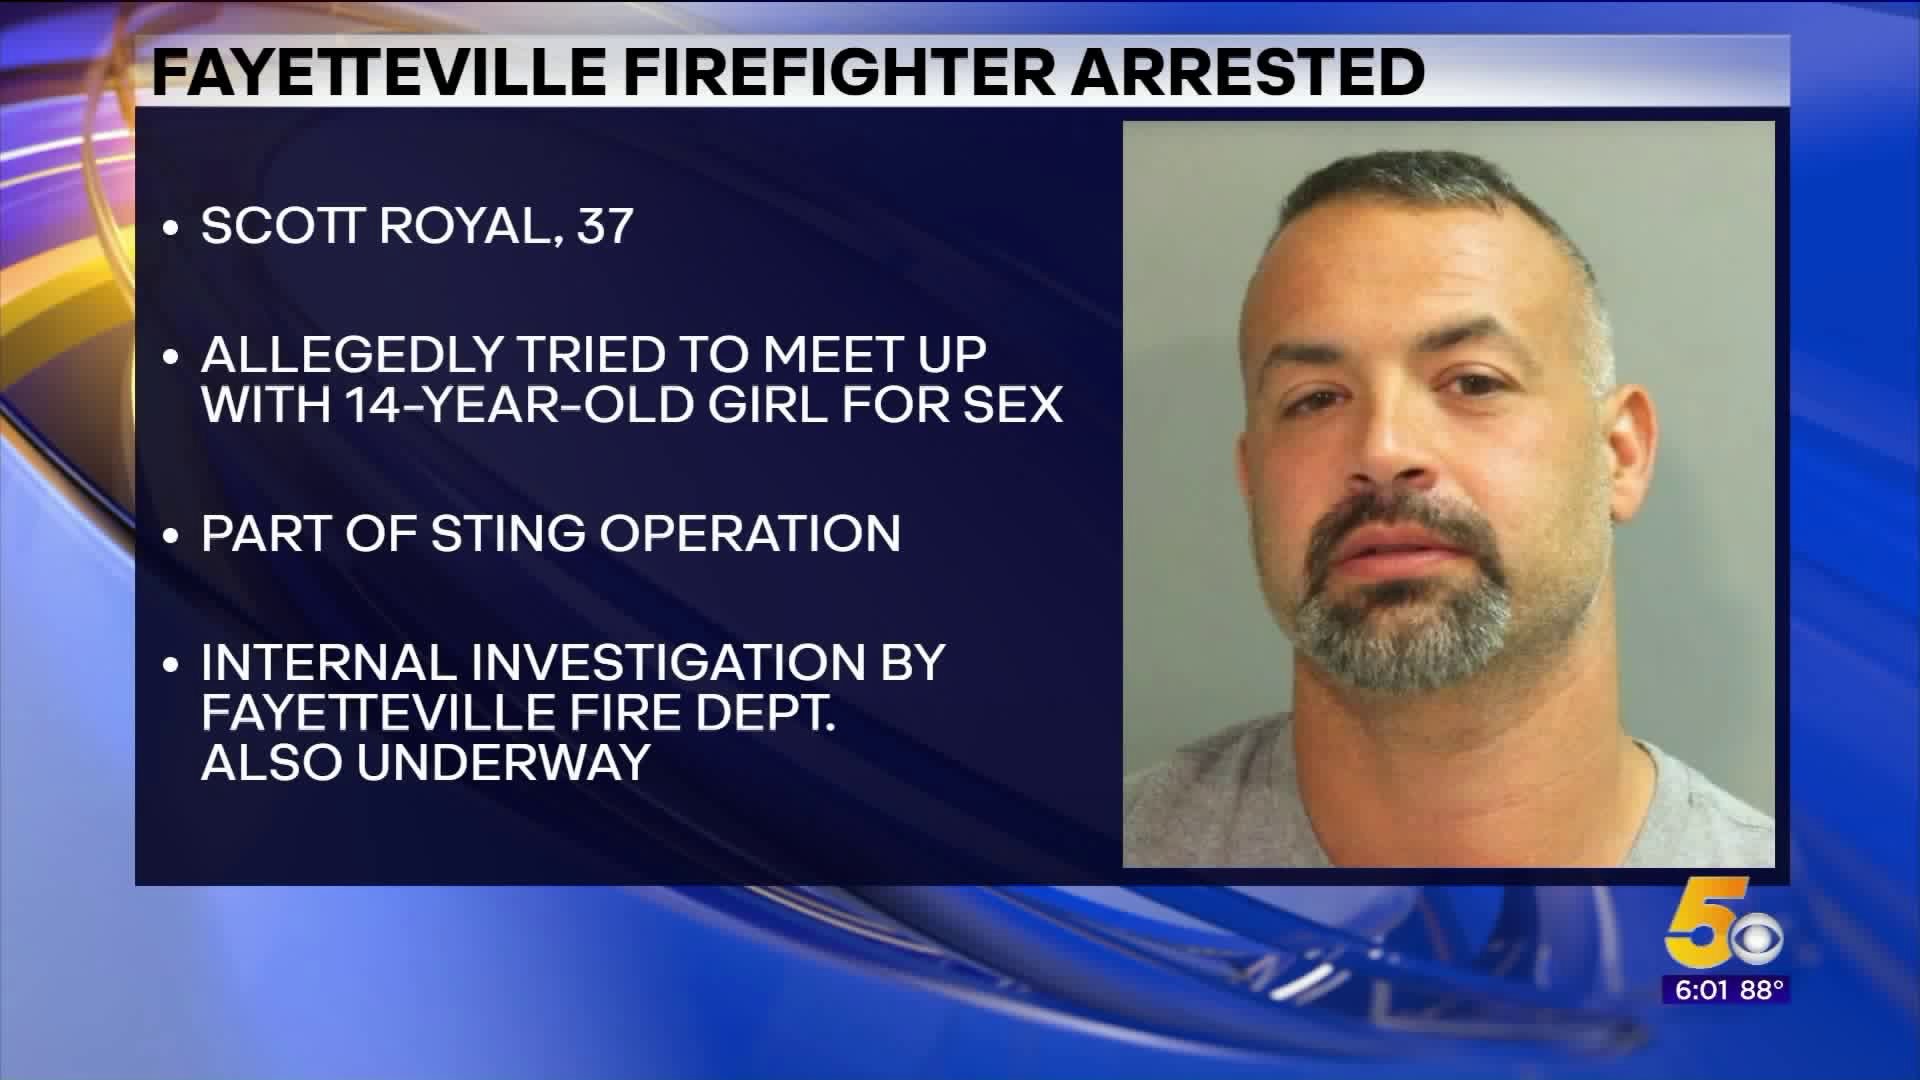 Fayetteville Firefighter Arrested For Online Enticement Of Minor